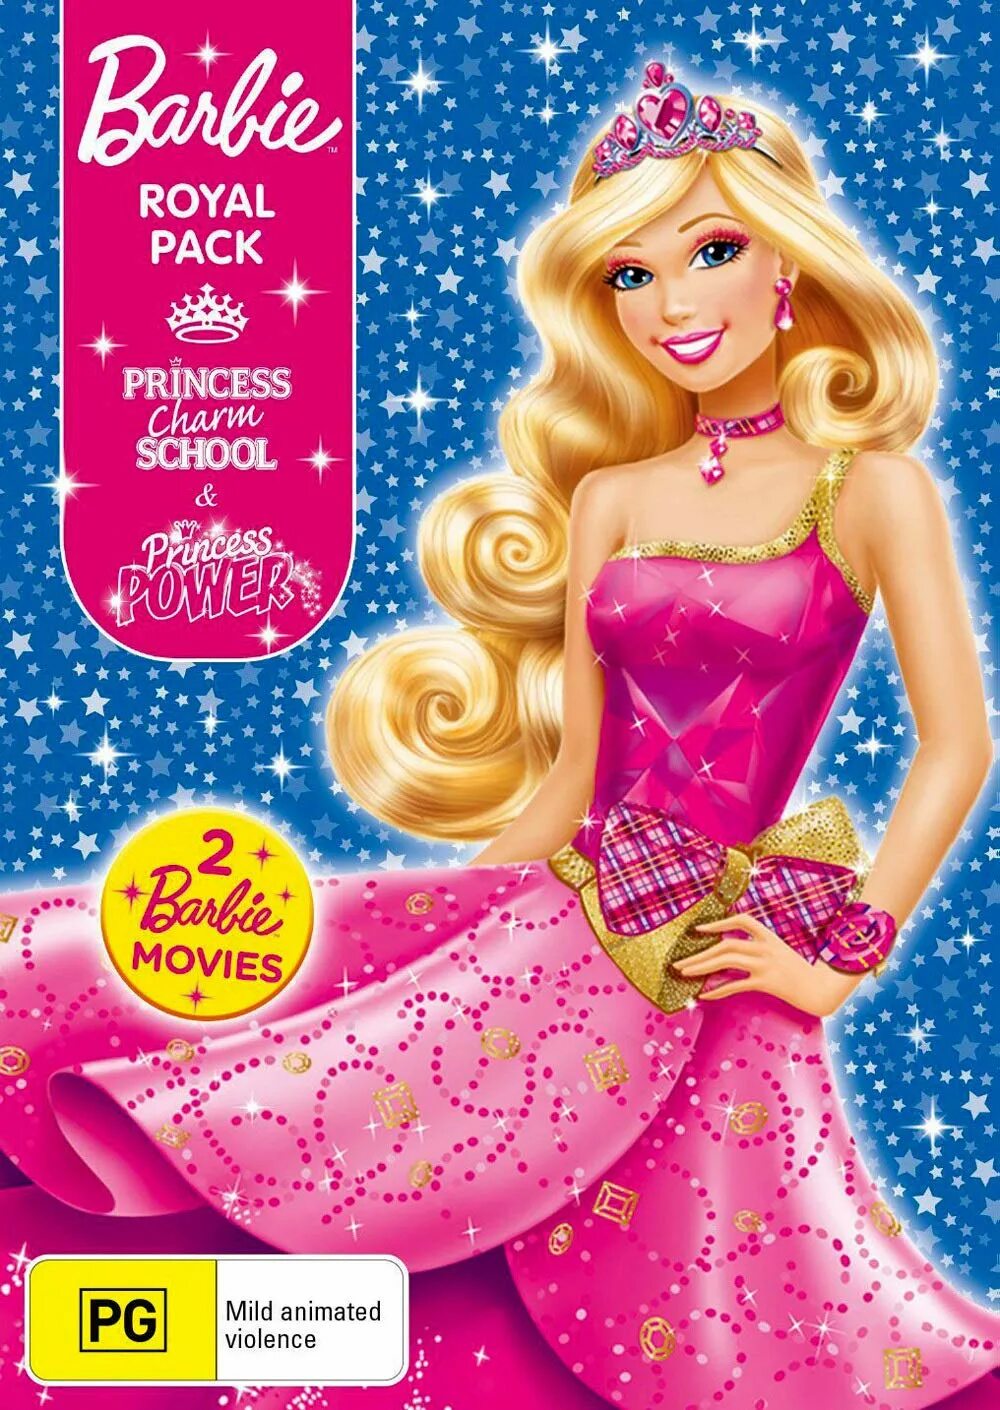 Реклама принцессы. Barbie School. Барби школа принцесс. Barbie Princess Charm. Barbie Princess Charm School кукла.